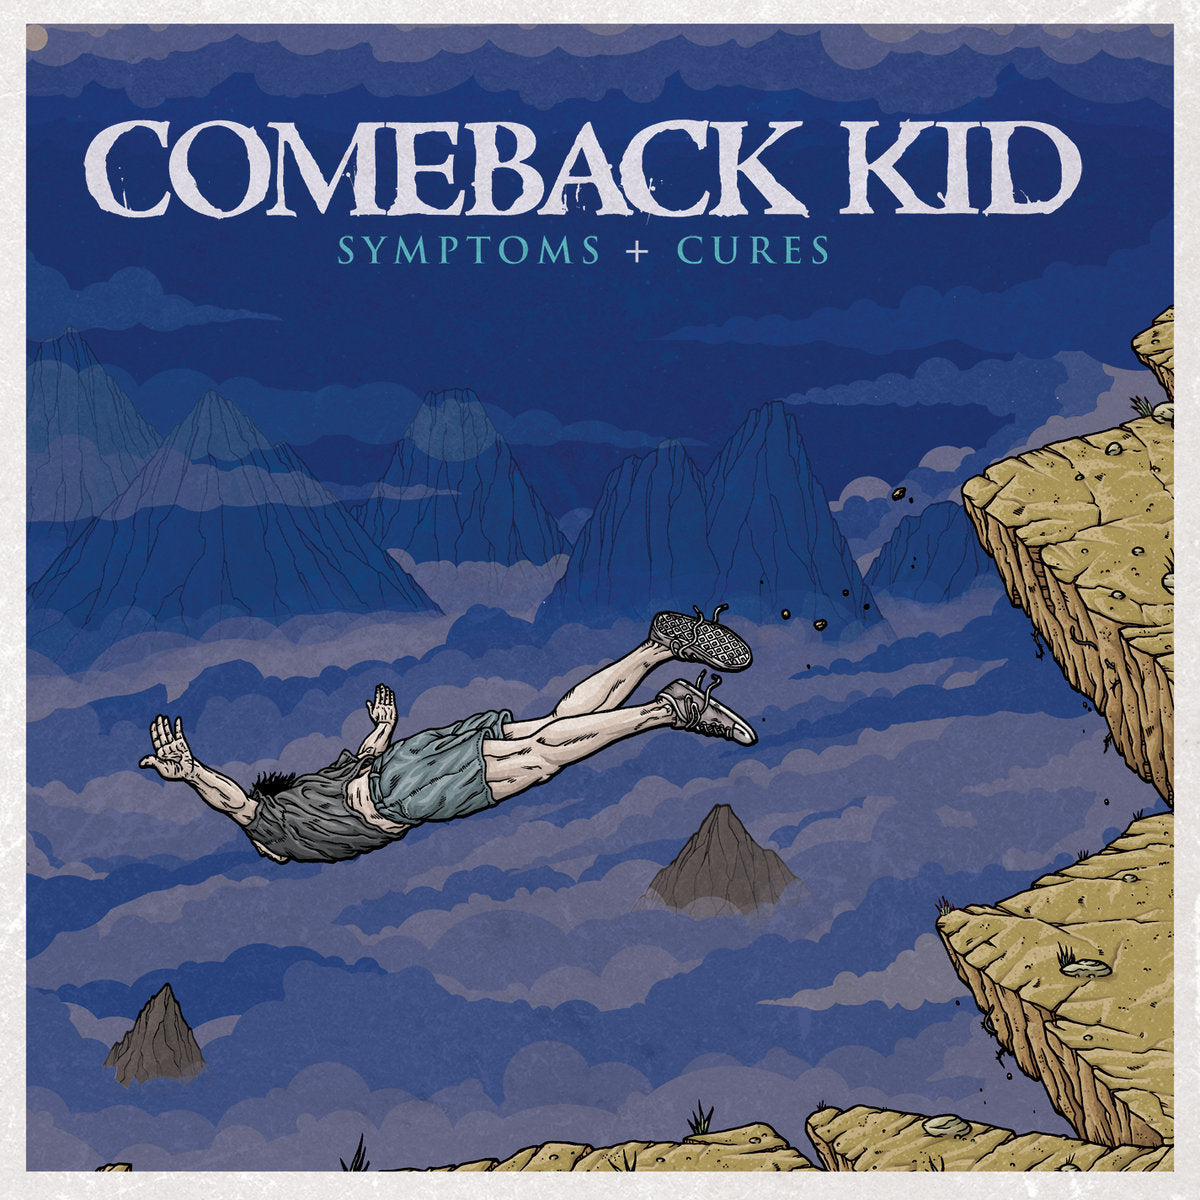 Comeback Kid "Symptoms + Cures" 12" Vinyl